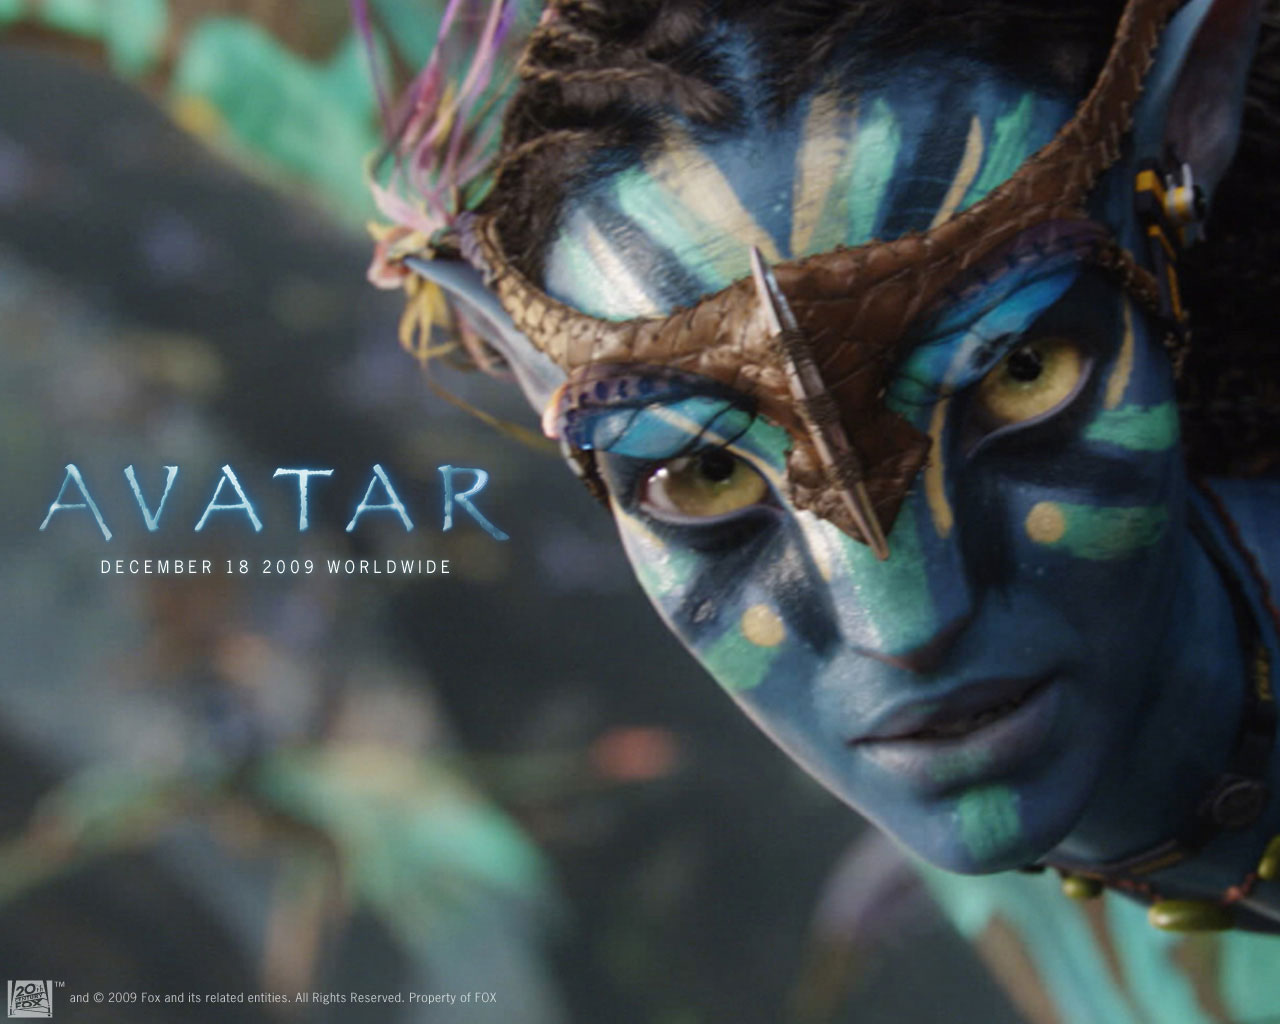 https://blogger.googleusercontent.com/img/b/R29vZ2xl/AVvXsEgkdh_UPMr4h_qe1uZjt2k_3NfF_oR4n0dvZ-NDG14a2zaANcw4r2tWz30BshyphenhyphenKCgp0UmaiKnBnLzE1FESejAOxNxsg8PAV7udy9HAlkYTyFMJihNrZvsH8fkohNttl7FTmGiGJFWOfmToN/s1600/Avatar-Movie-Wallpapers-Avatar-Movie-Paos-Pics-Images-10.jpg